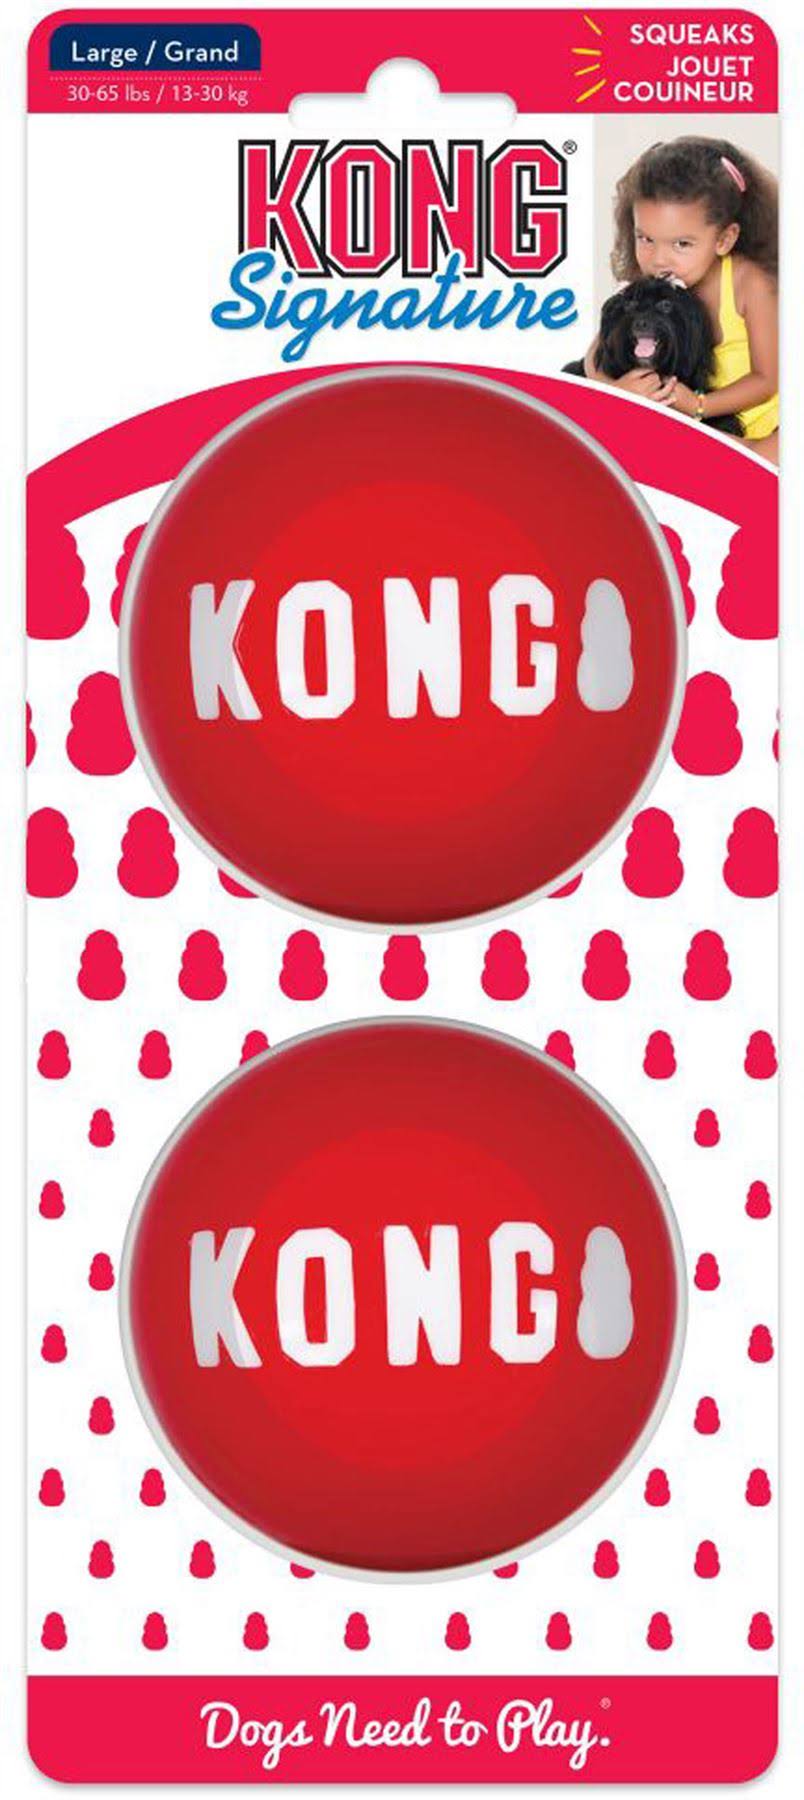 KONG Signature Ball - Large